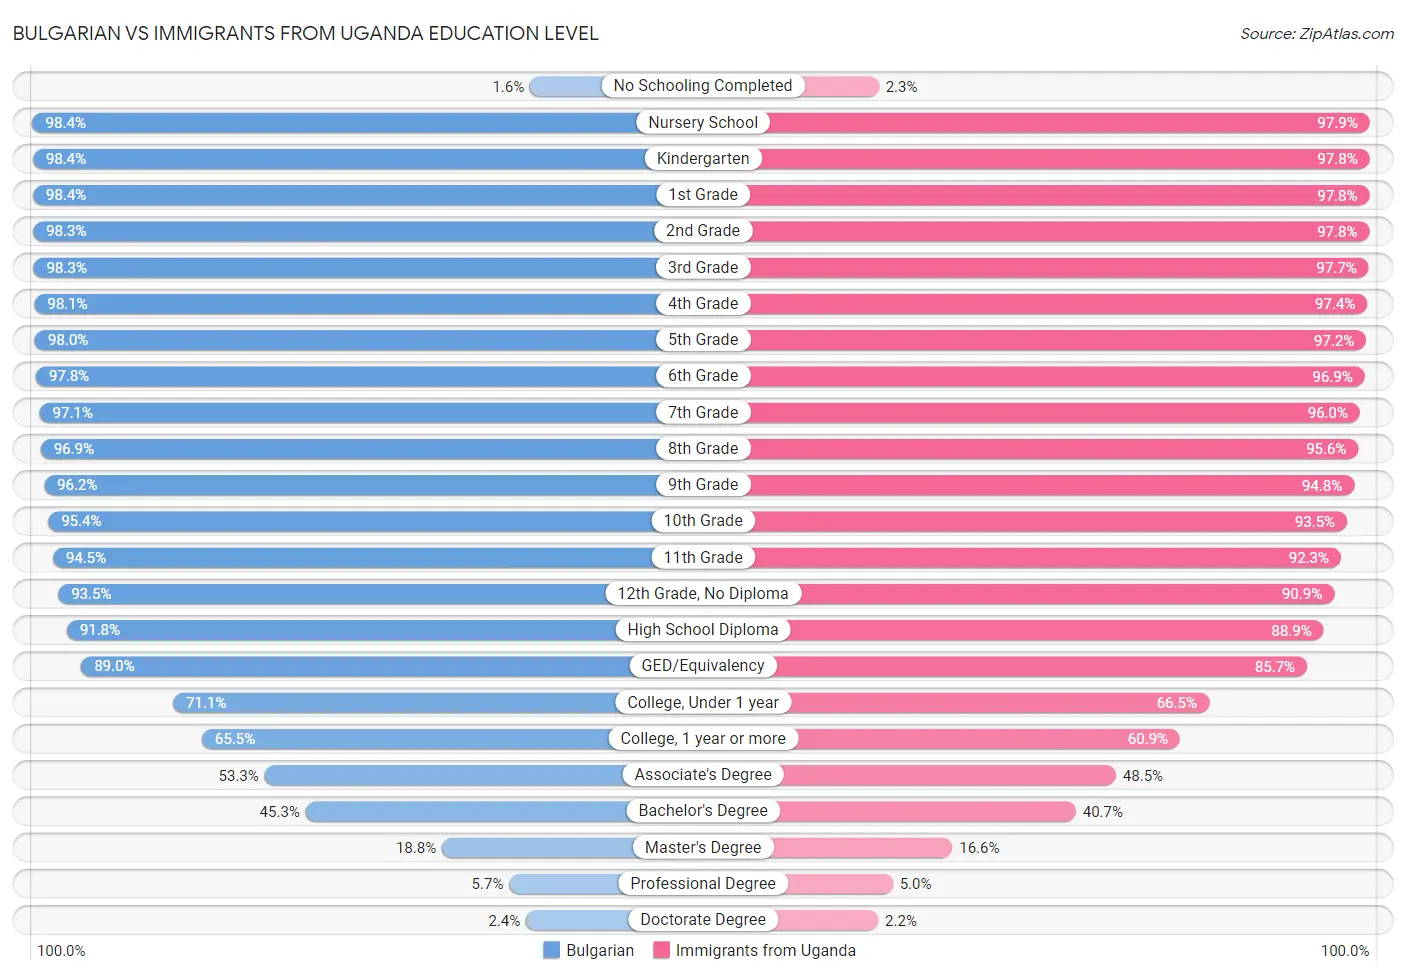 Bulgarian vs Immigrants from Uganda Education Level